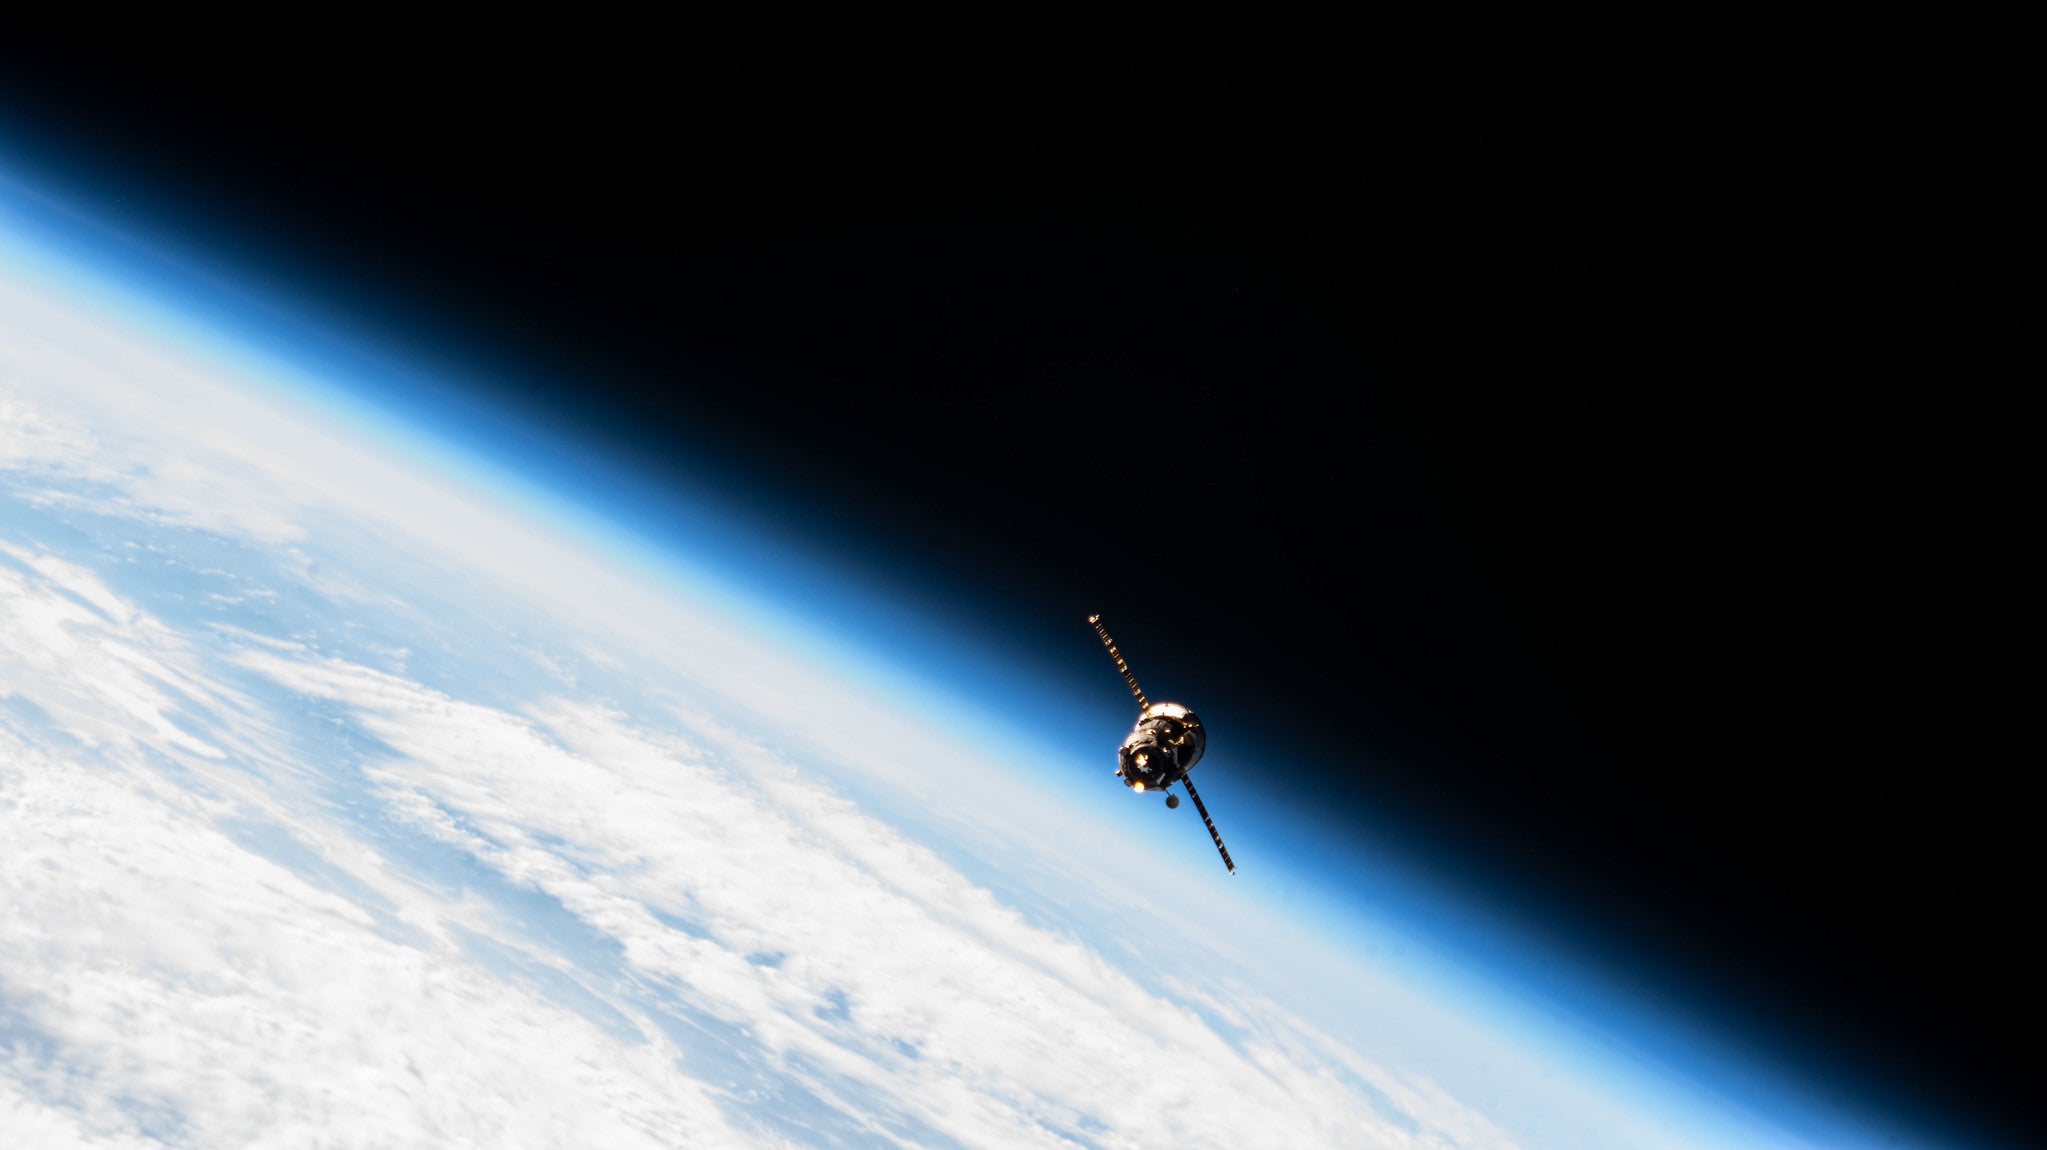 ISS Progress 81 resupply ship departing the ISS, February 7, 2023. (Photo: NASA)